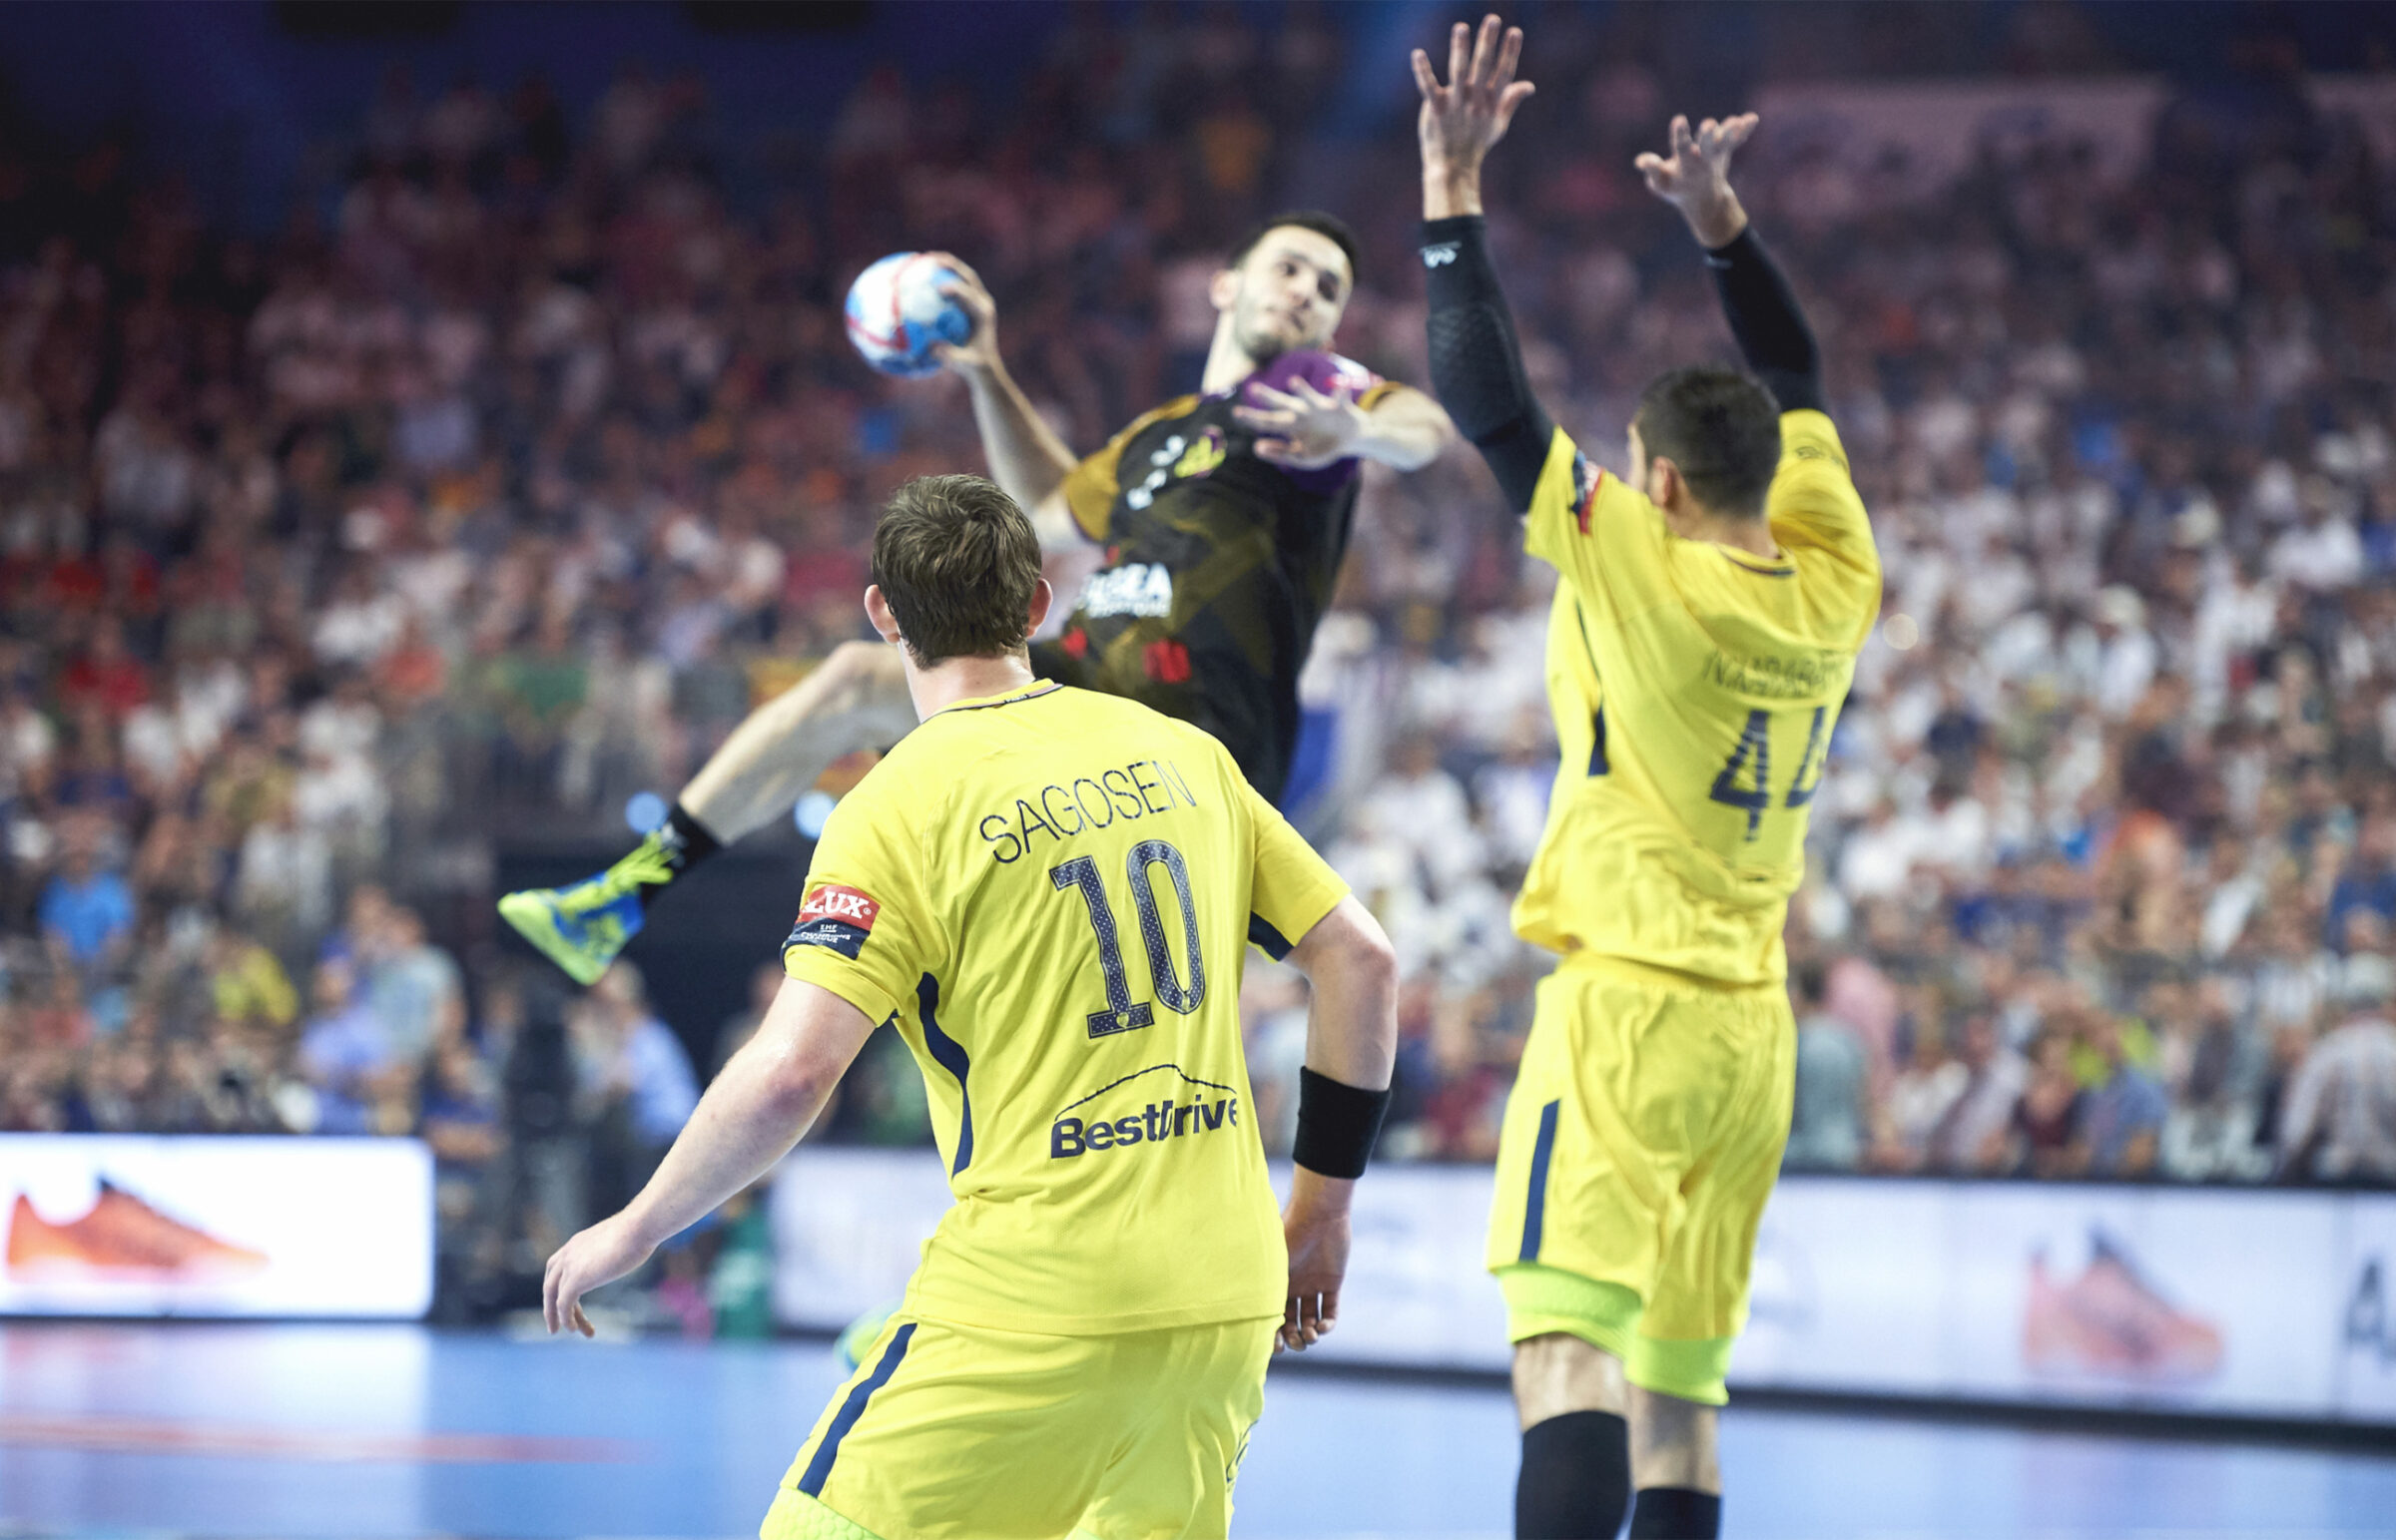 The European Handball Federation has partnered with sports anlytics company KINEXON Sports to track their players' peformances.